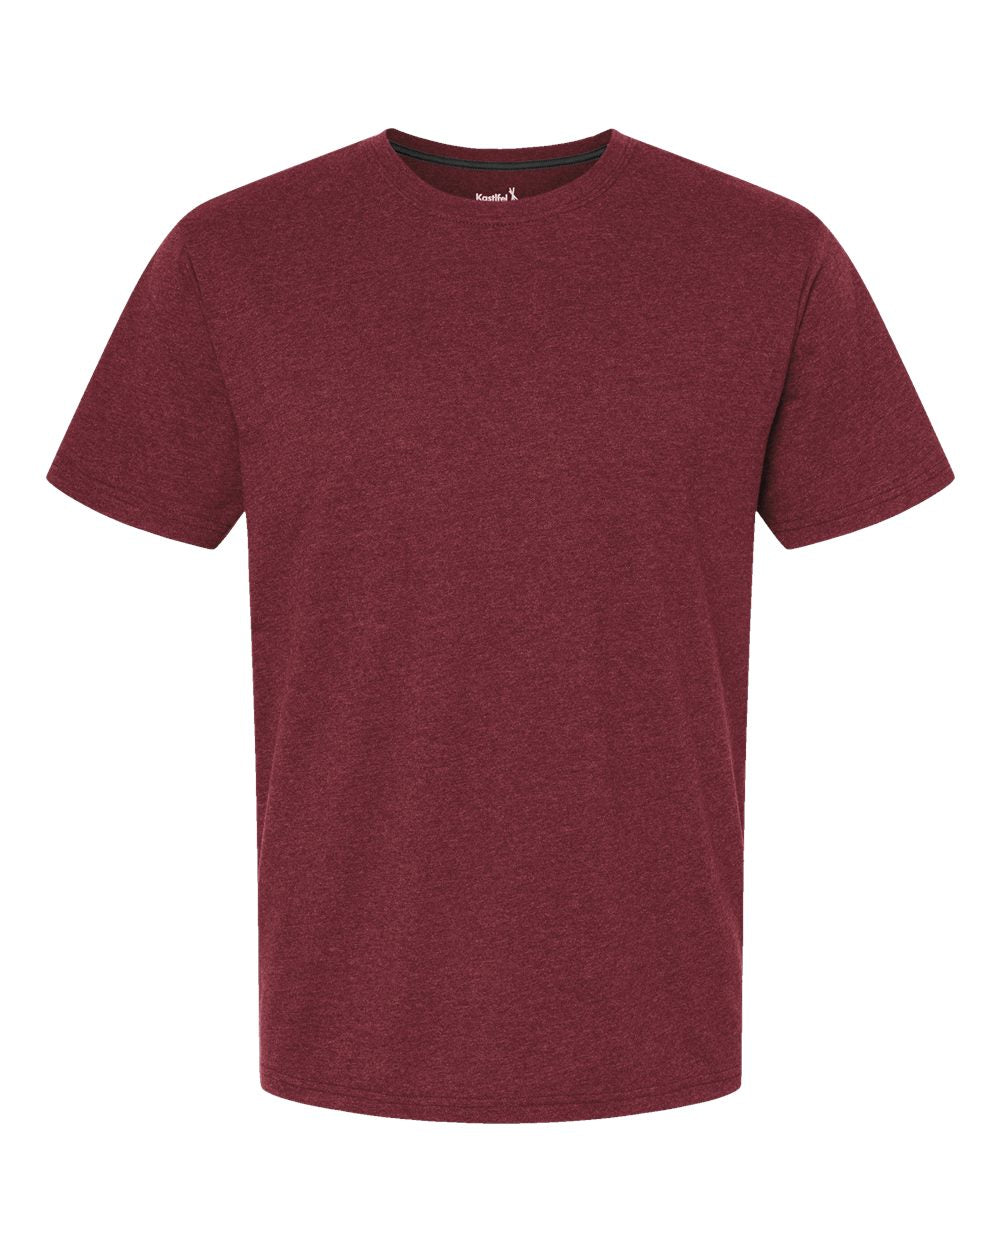 Customizable kastlfel recycledsoft t-shirt burgundy